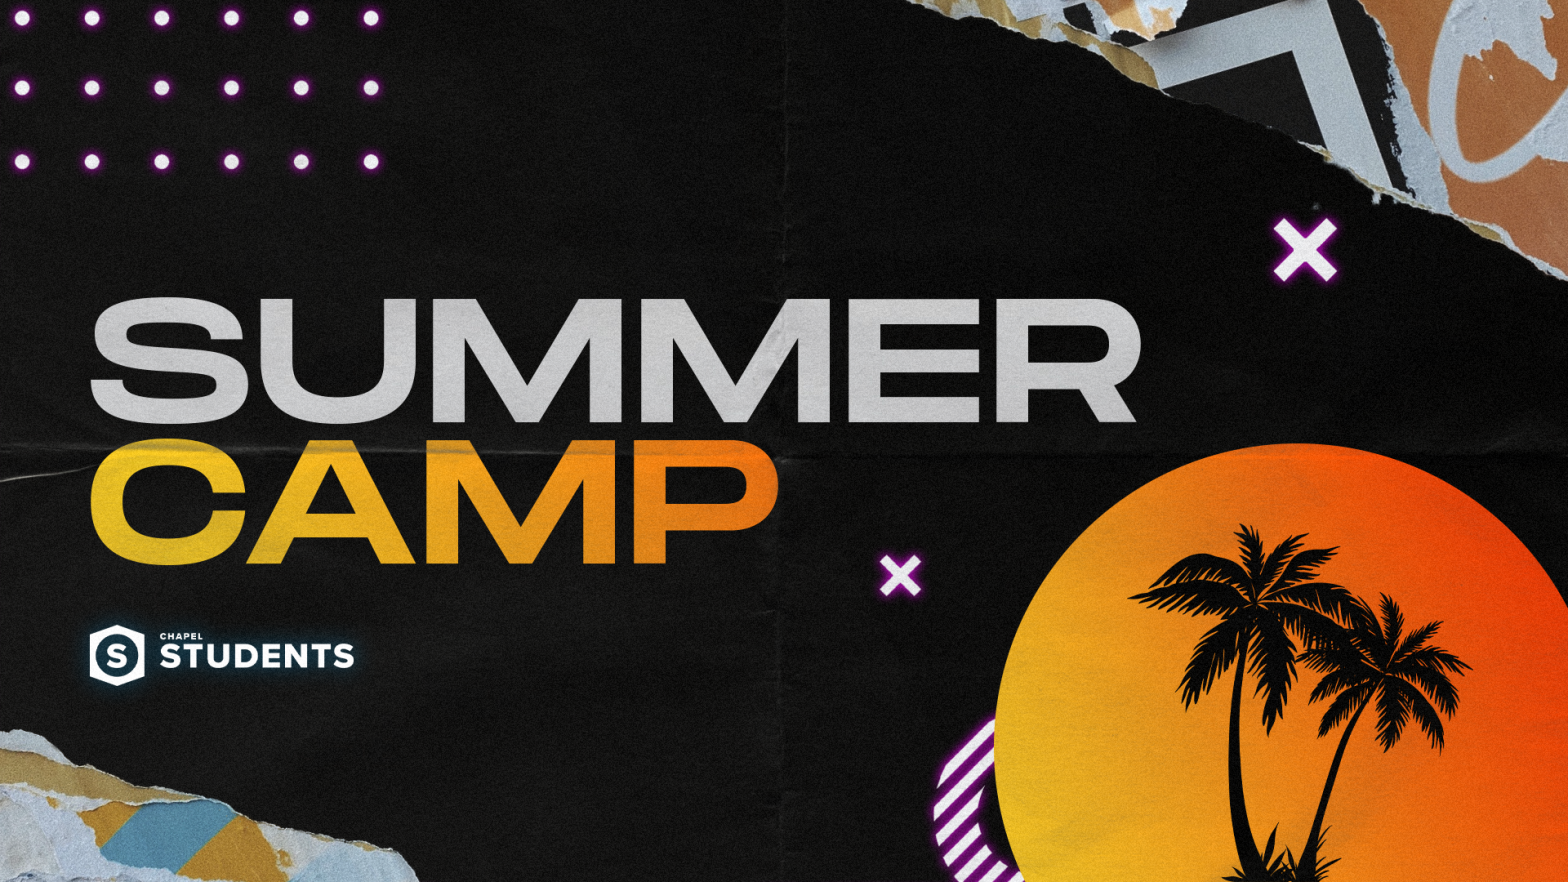 Summer Camp image